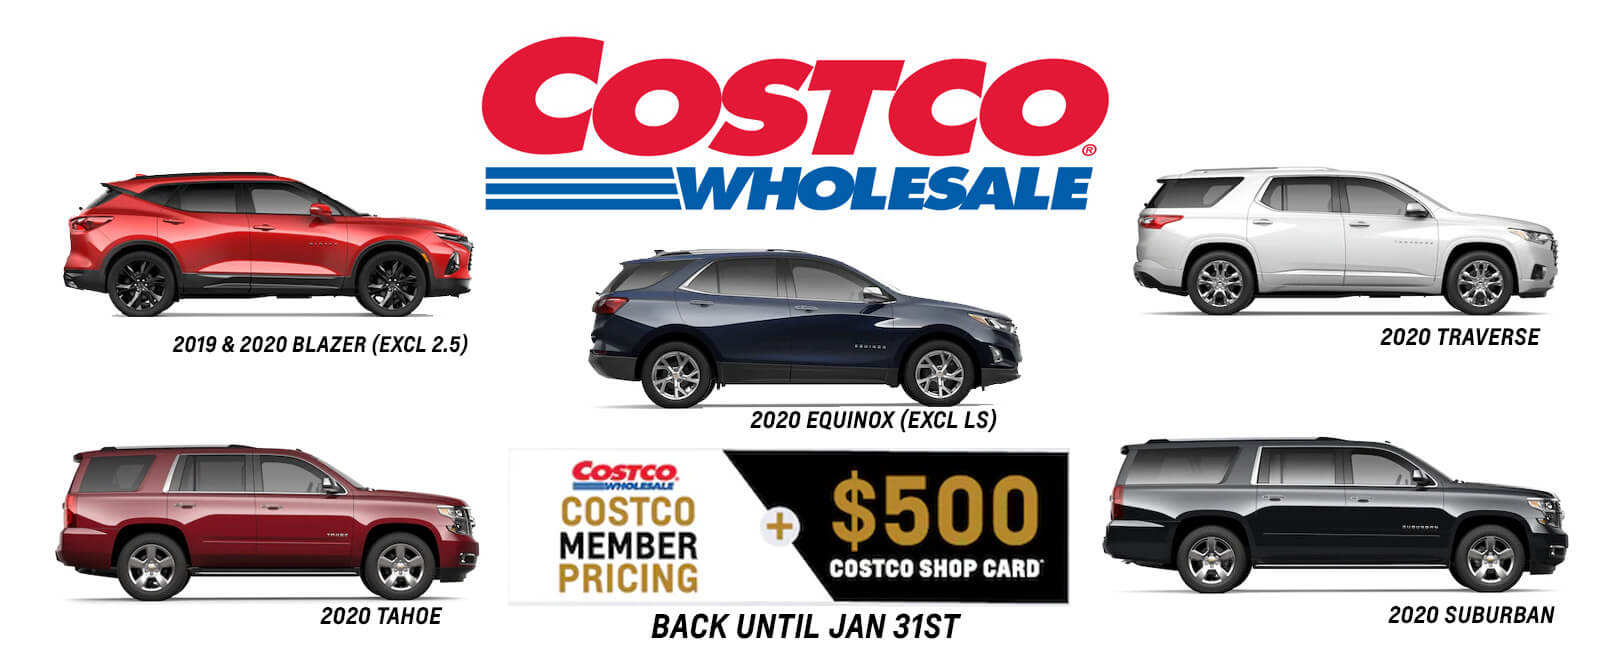 Costco Member Pricing Back until Jan 31st